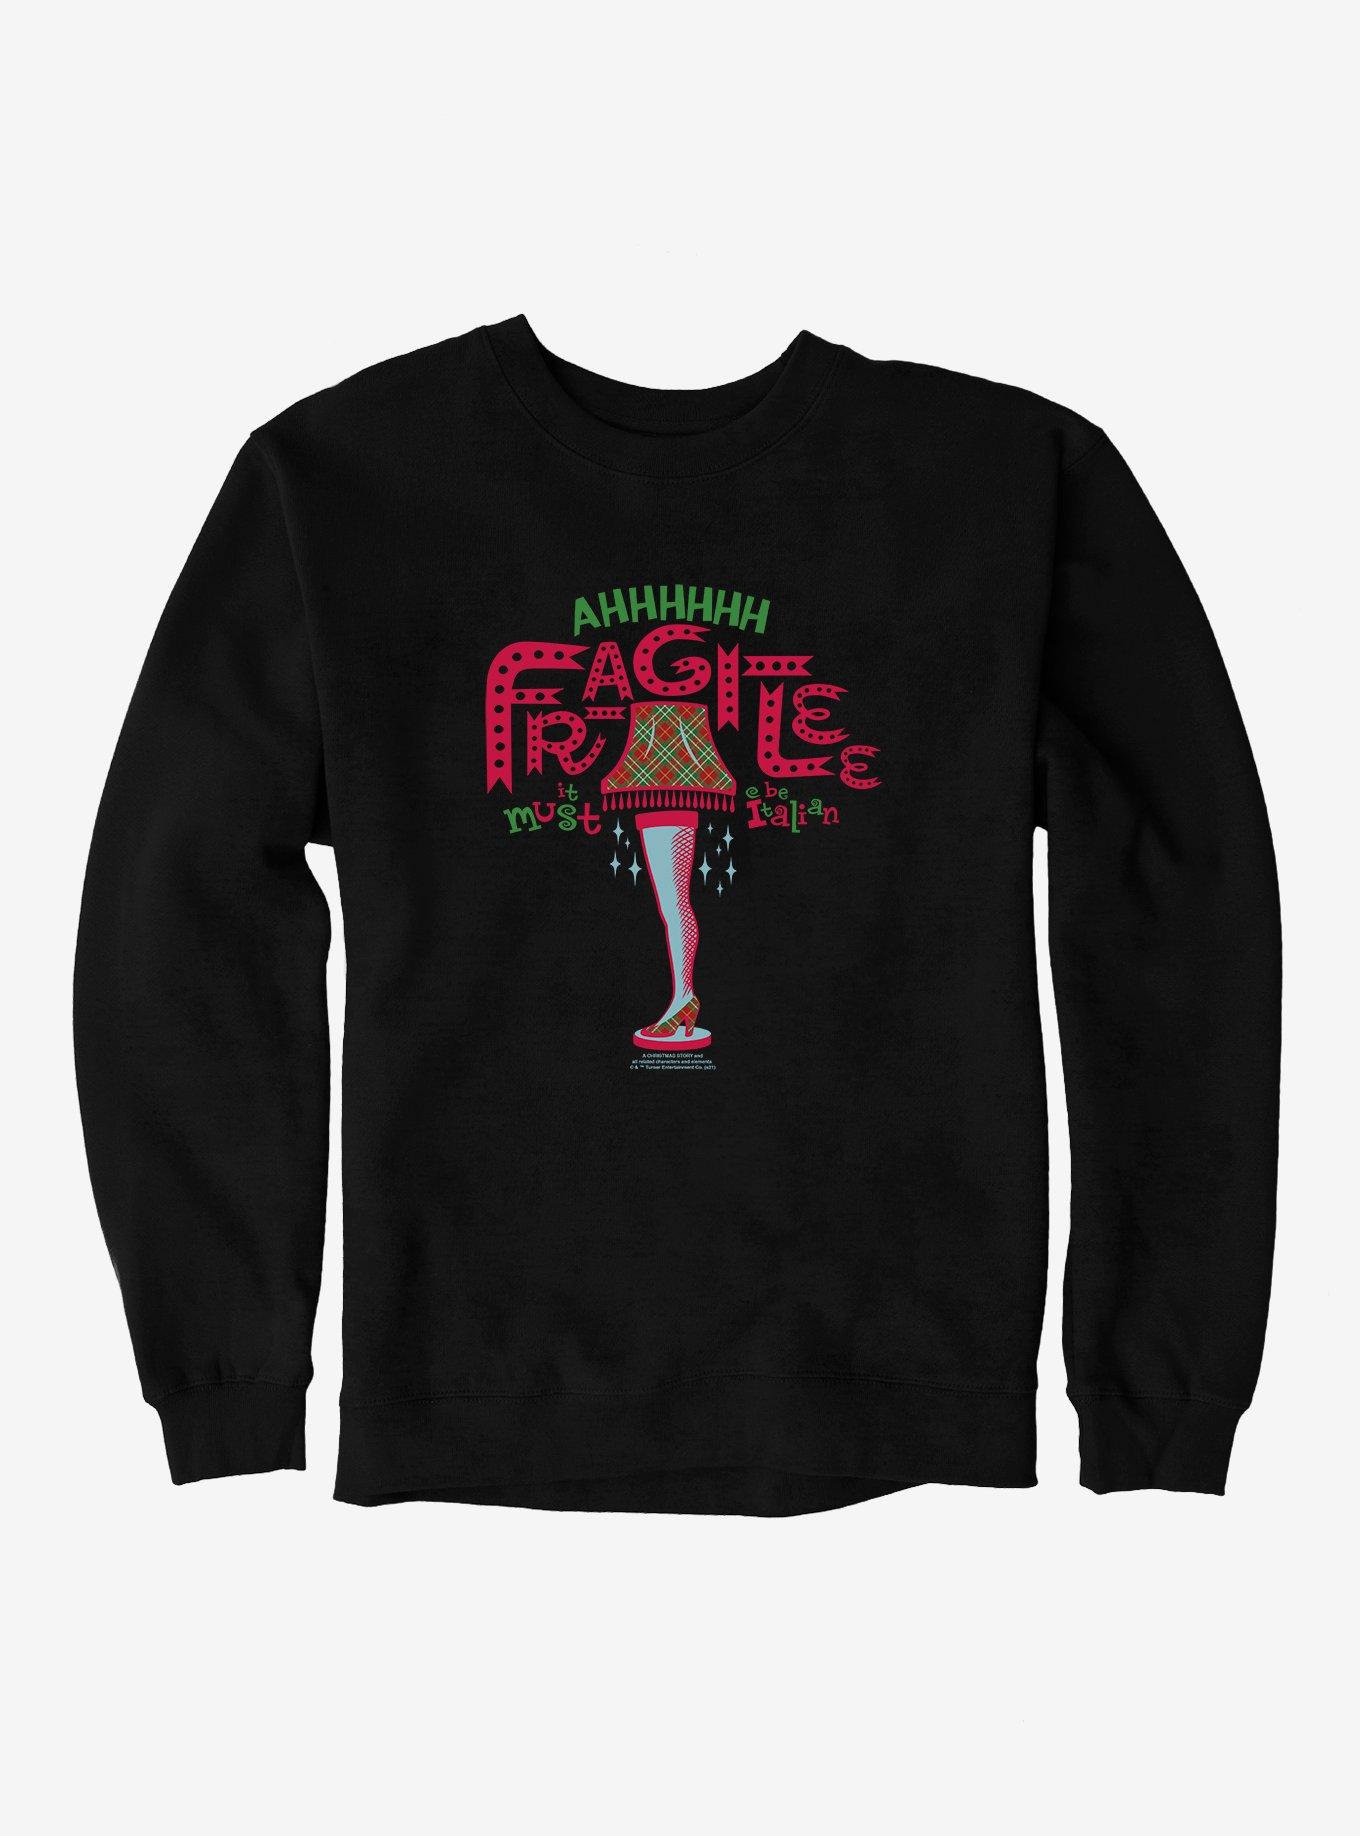 A Christmas Story Fragile It Must Be Italian Sweatshirt